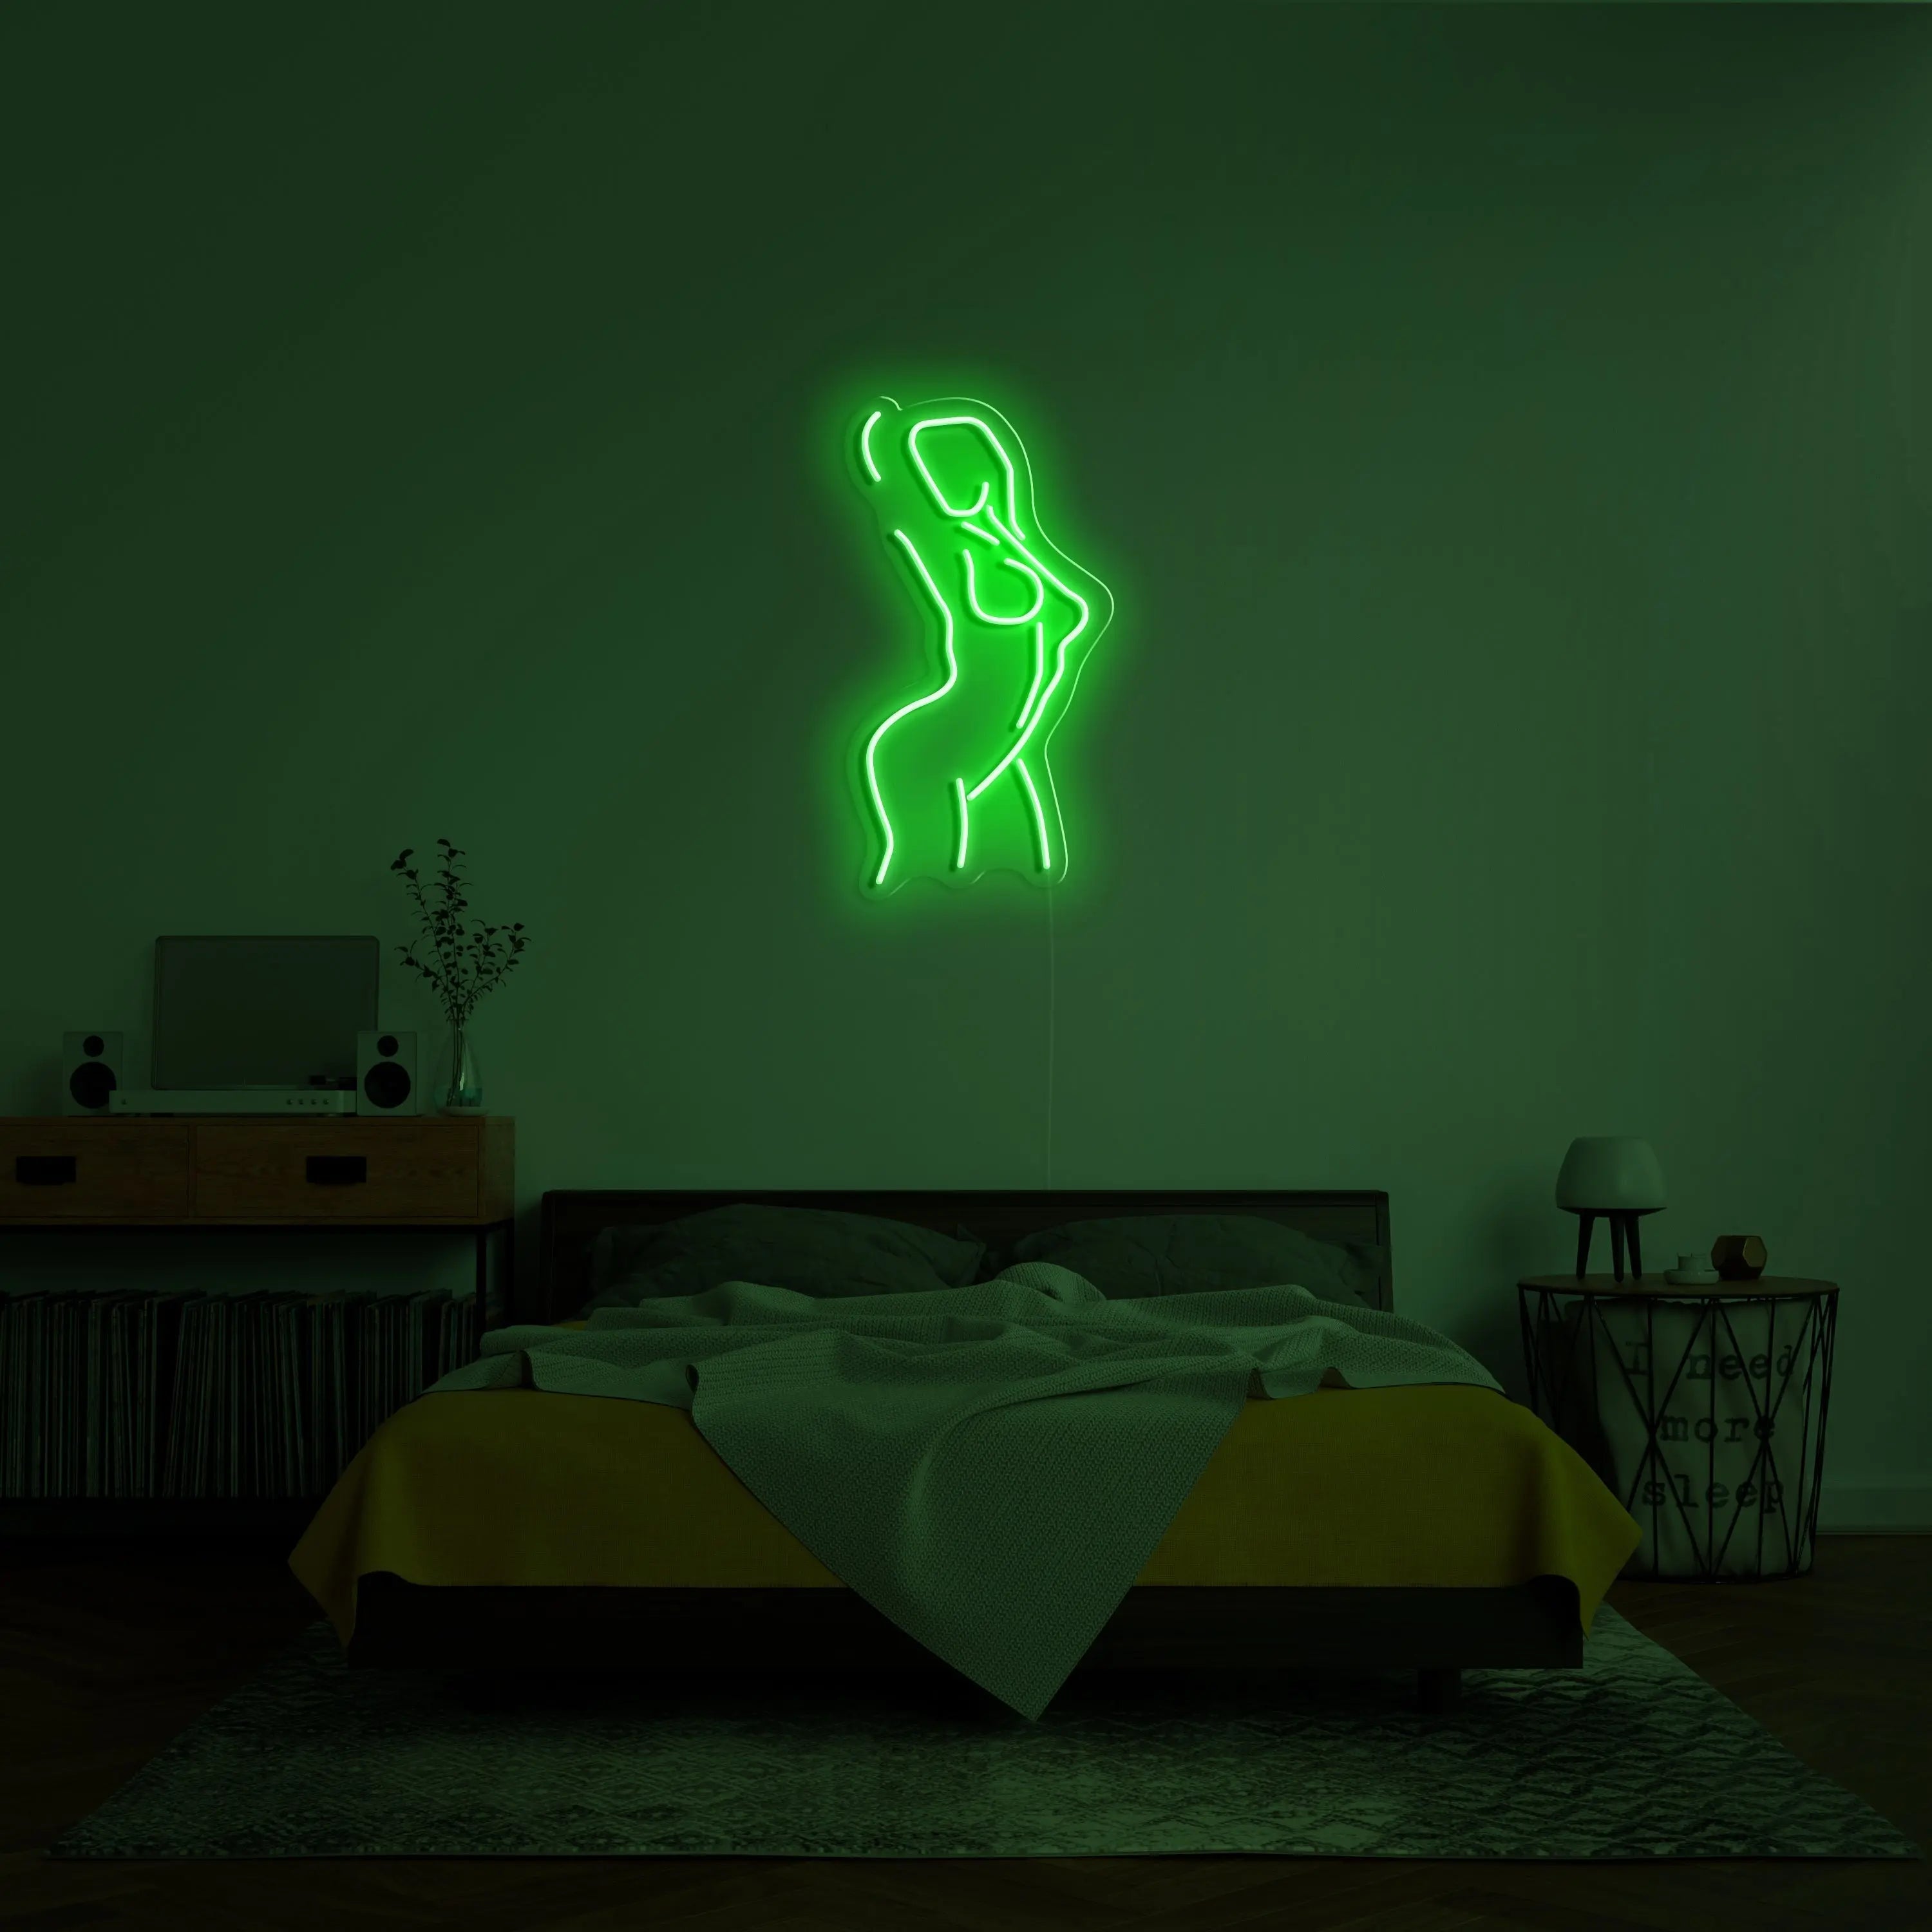 Female Pose LED Neon Sign - neonaffair